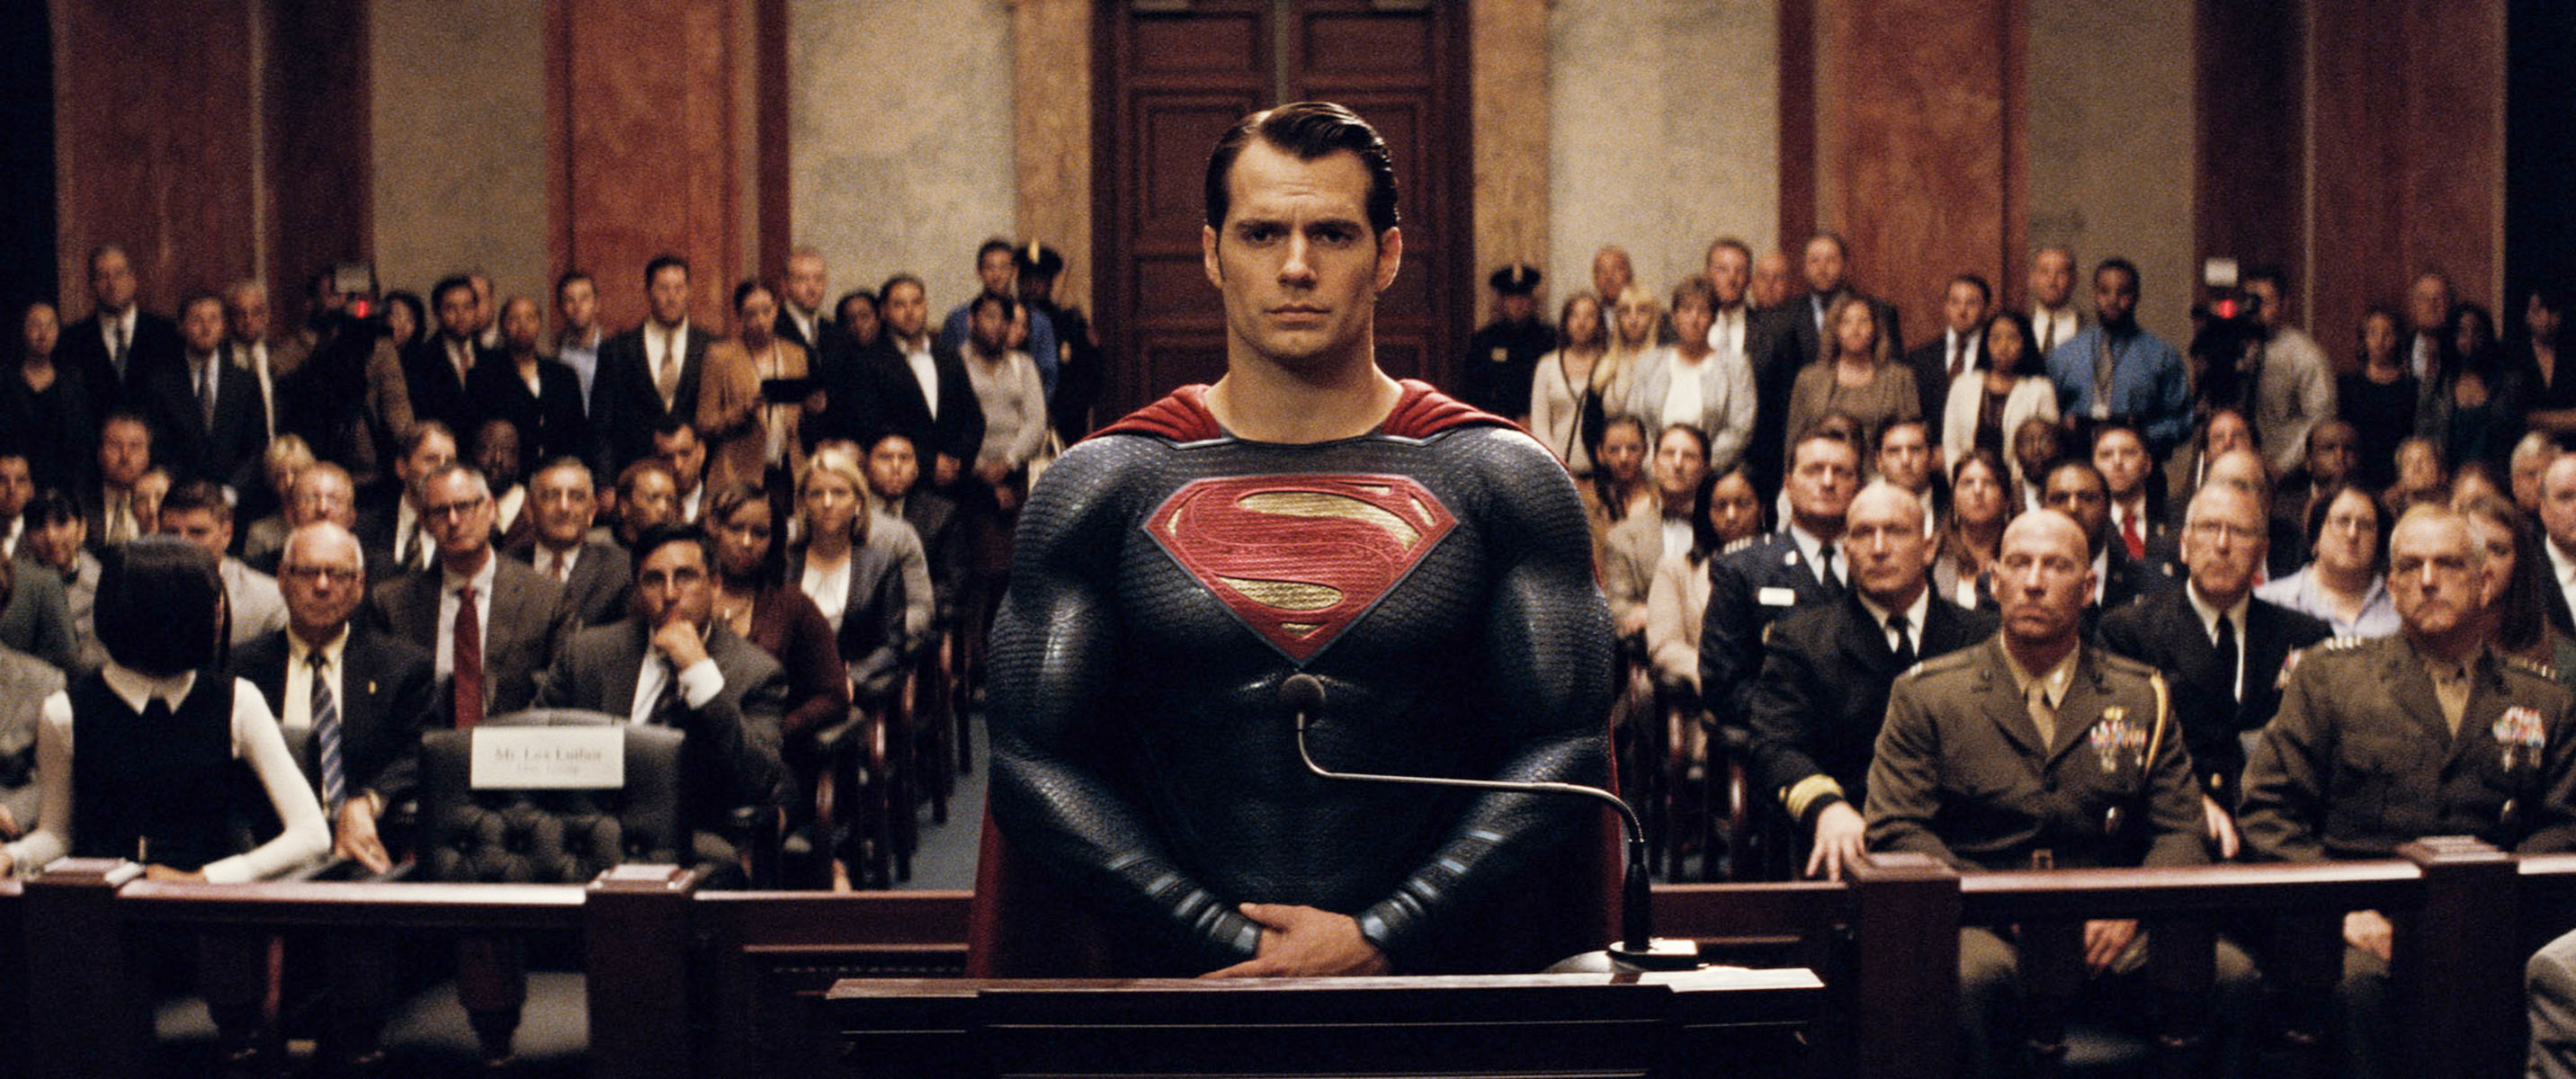 Superman in Congress